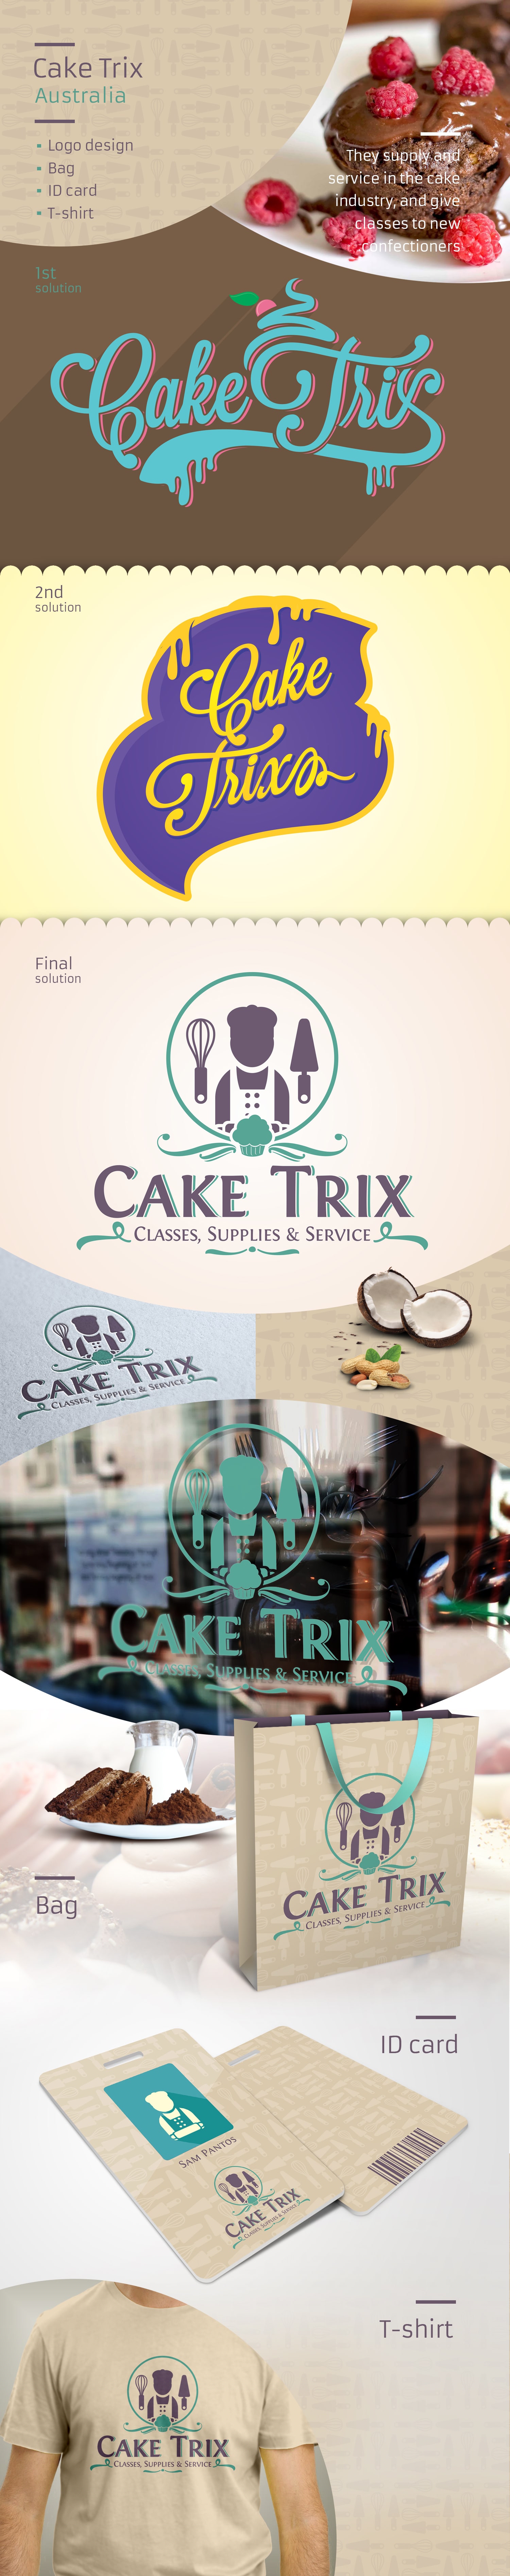 Cake trix australien corporate id